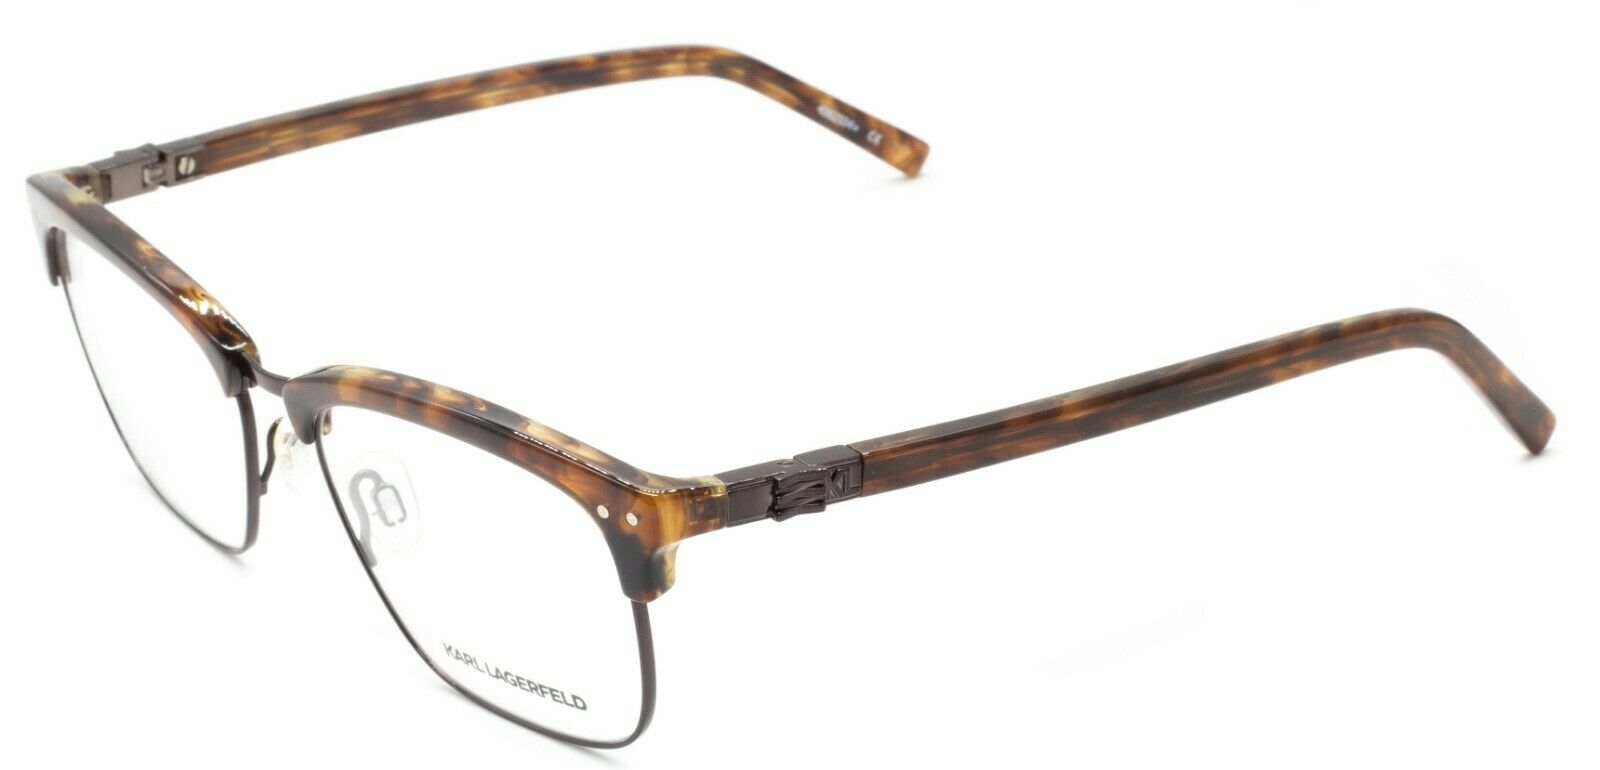 KARL LAGERFELD KL 25663990 53mm Eyewear FRAMES RX Glasses - Eyewear